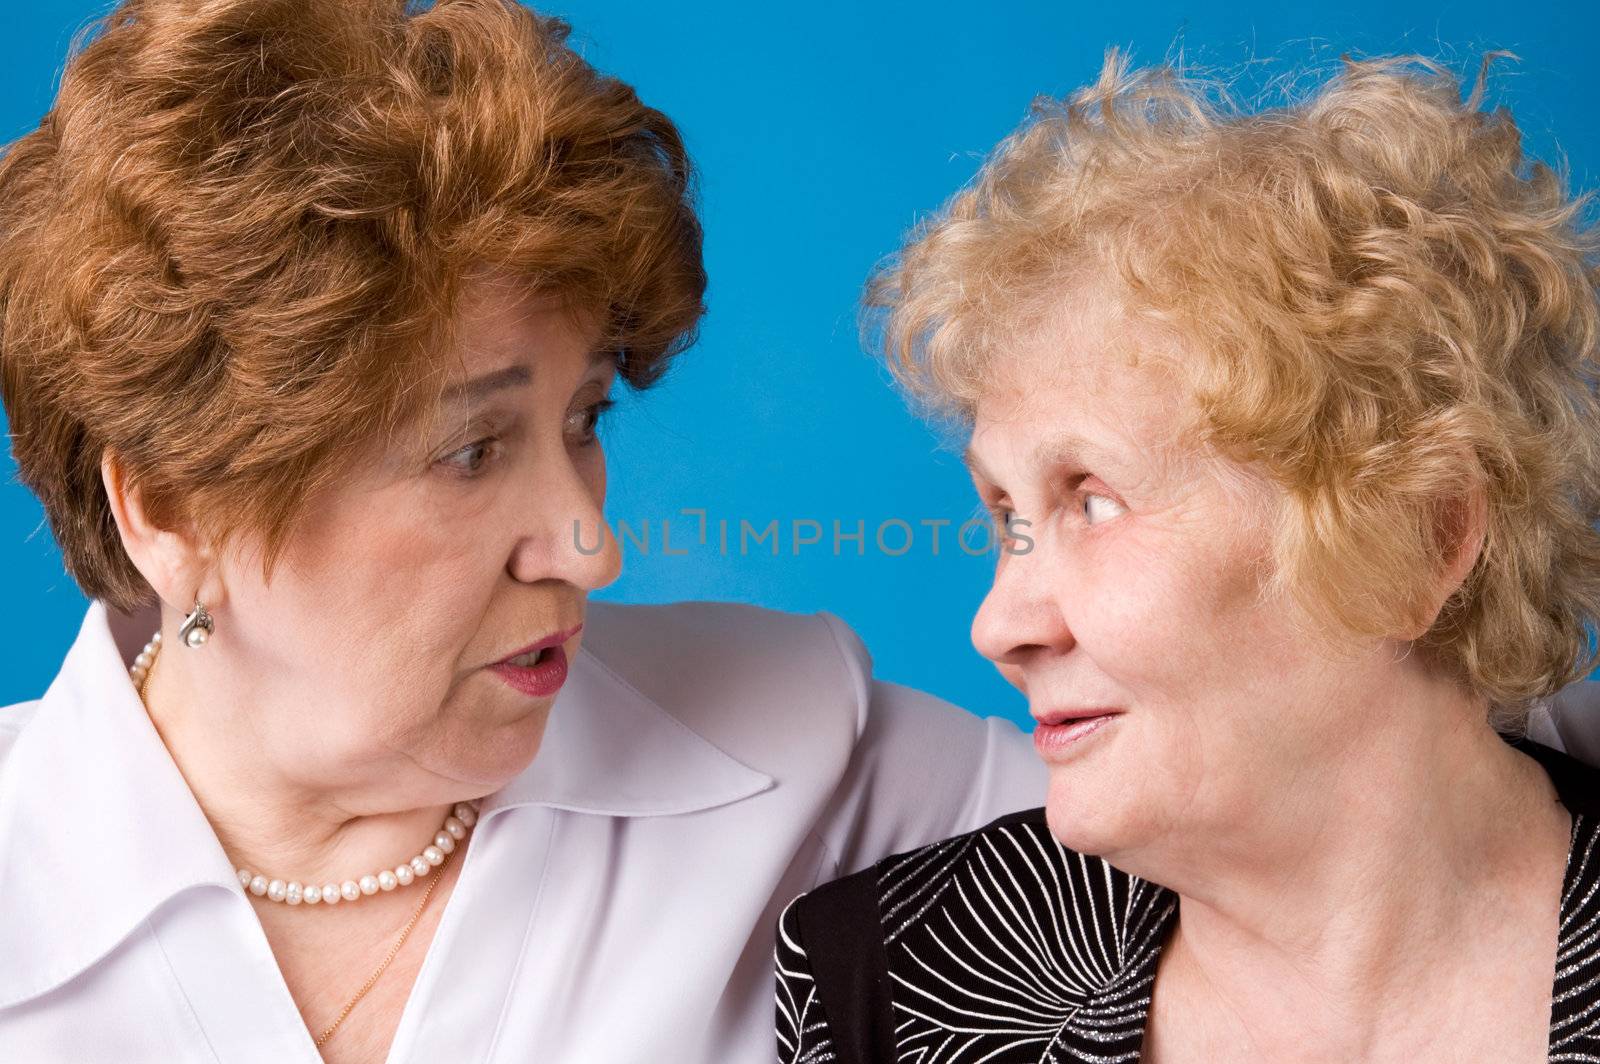 A portrait of two cheerful elderly women on a dark blue background.